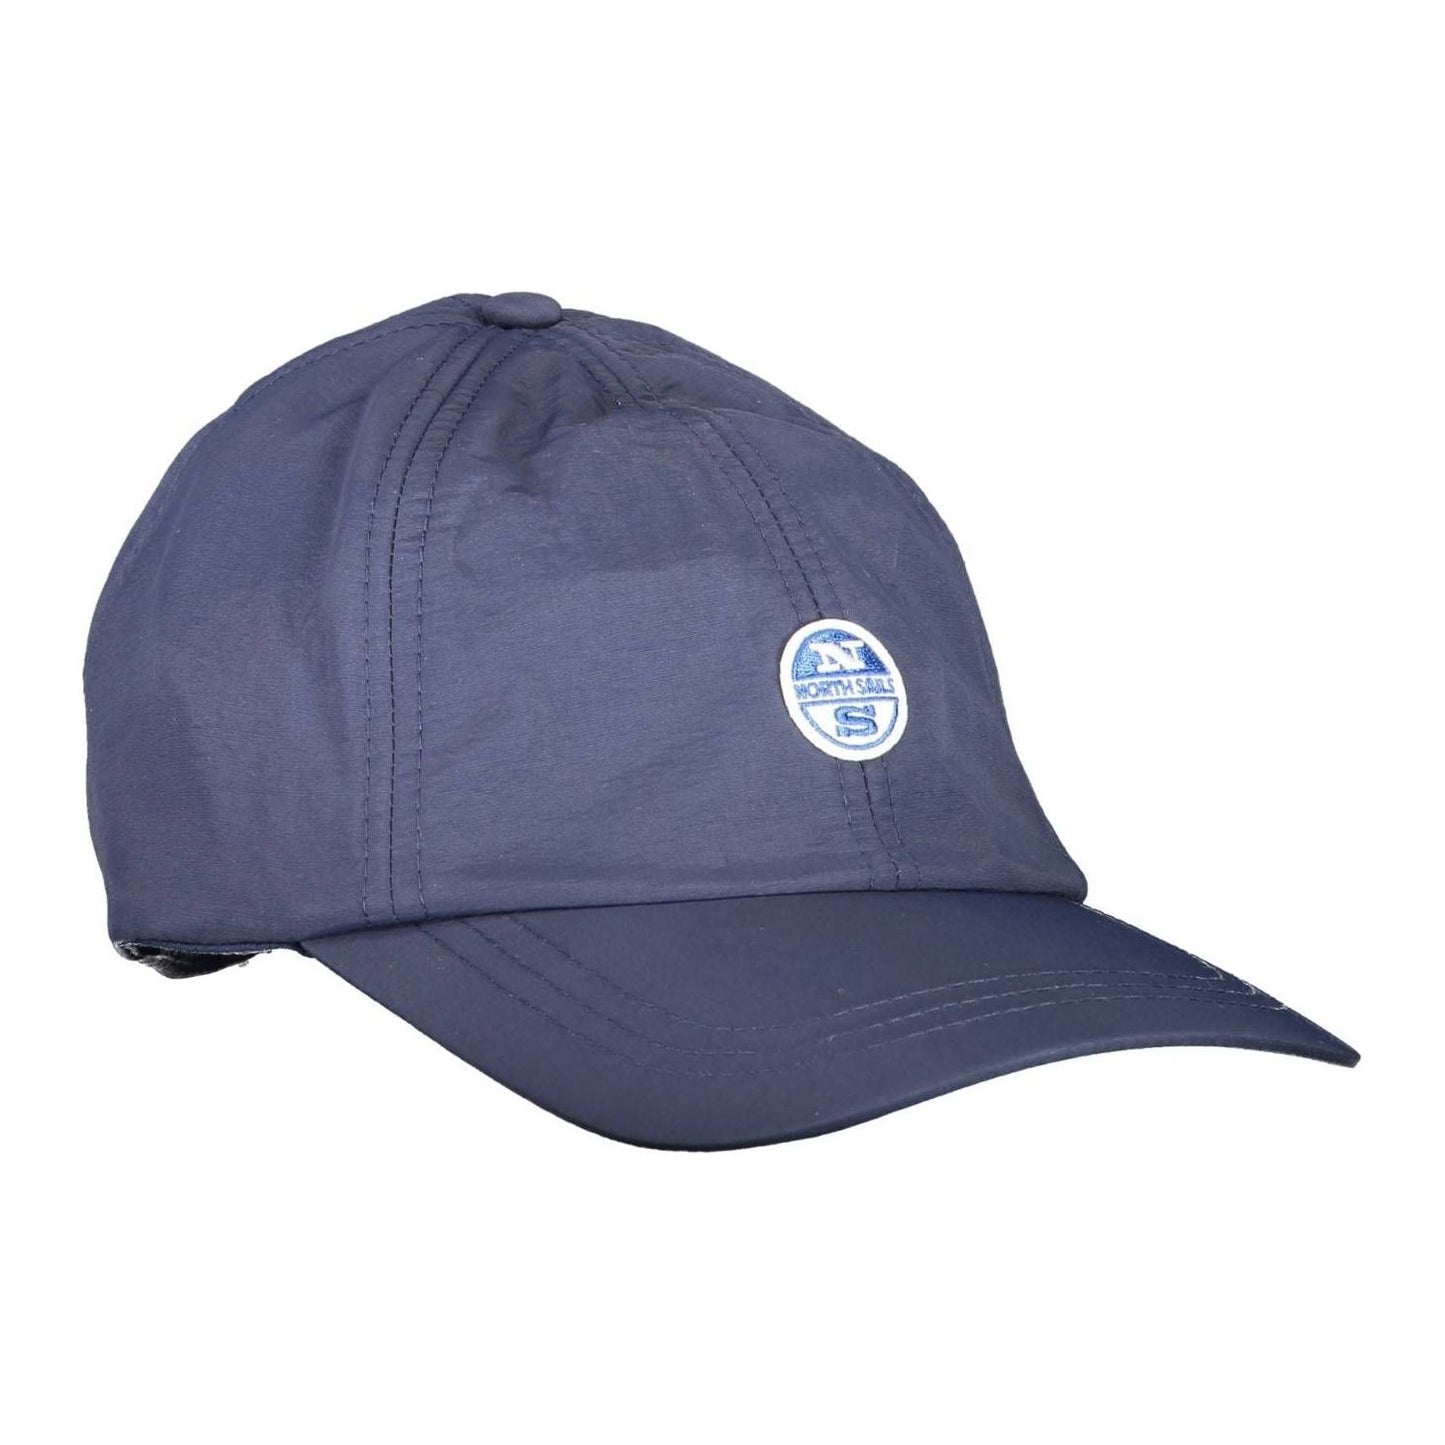 North Sails Sleek Blue Visor Cap with Signature Logo sleek-blue-visor-cap-with-signature-logo